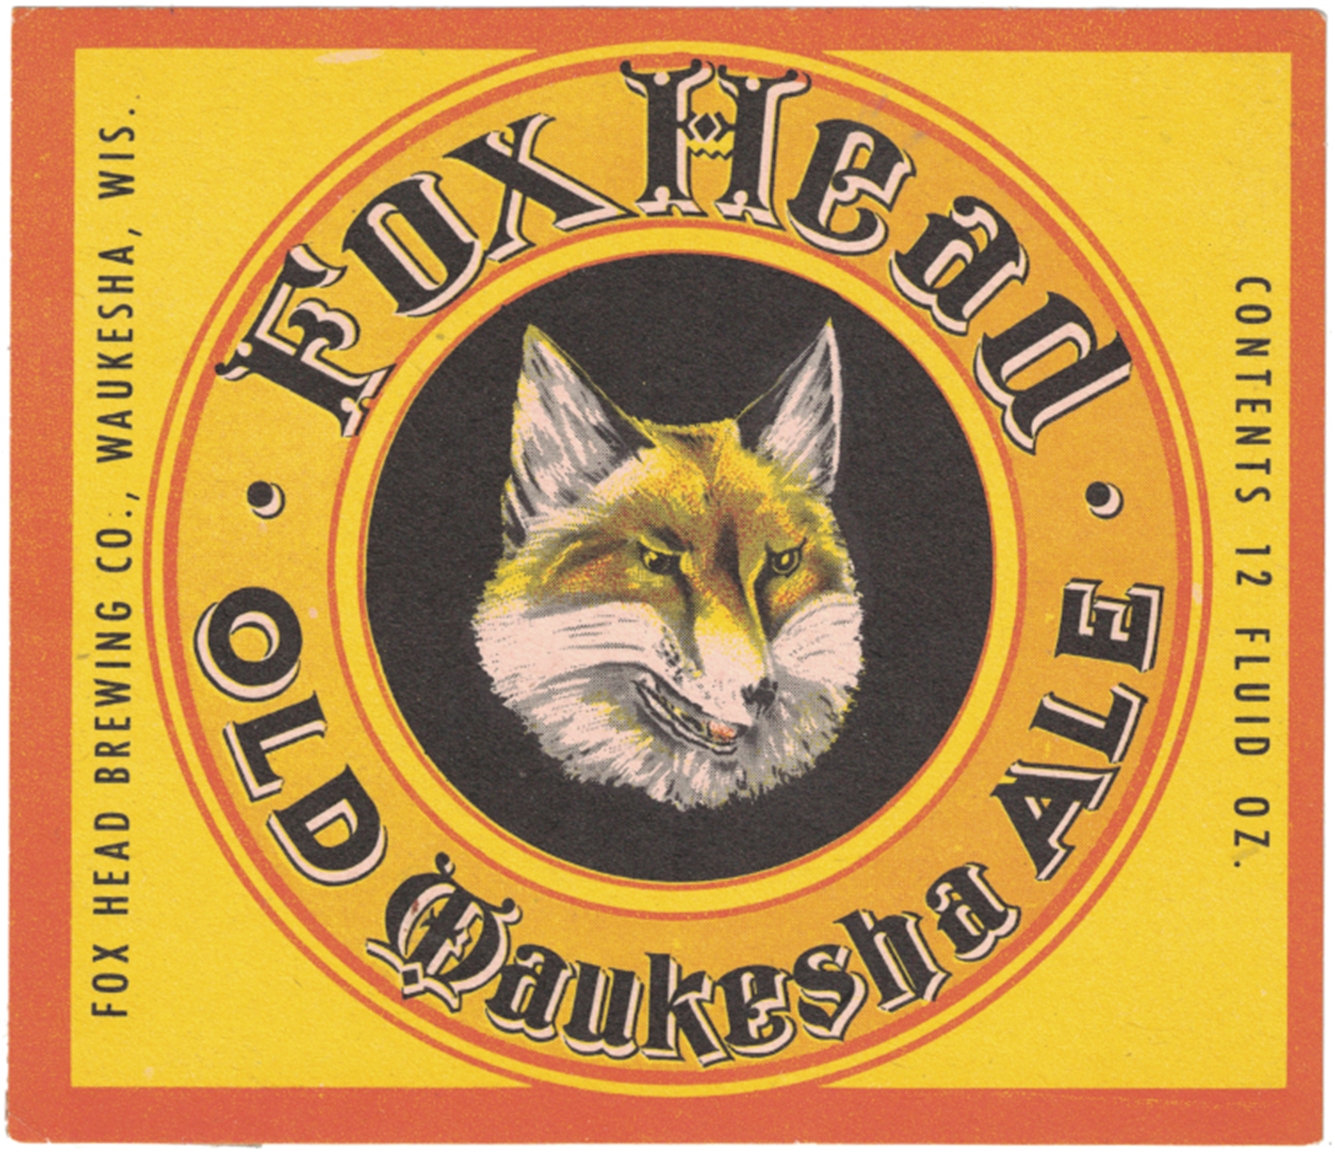 Fox Head Old Waukesha Ale Label